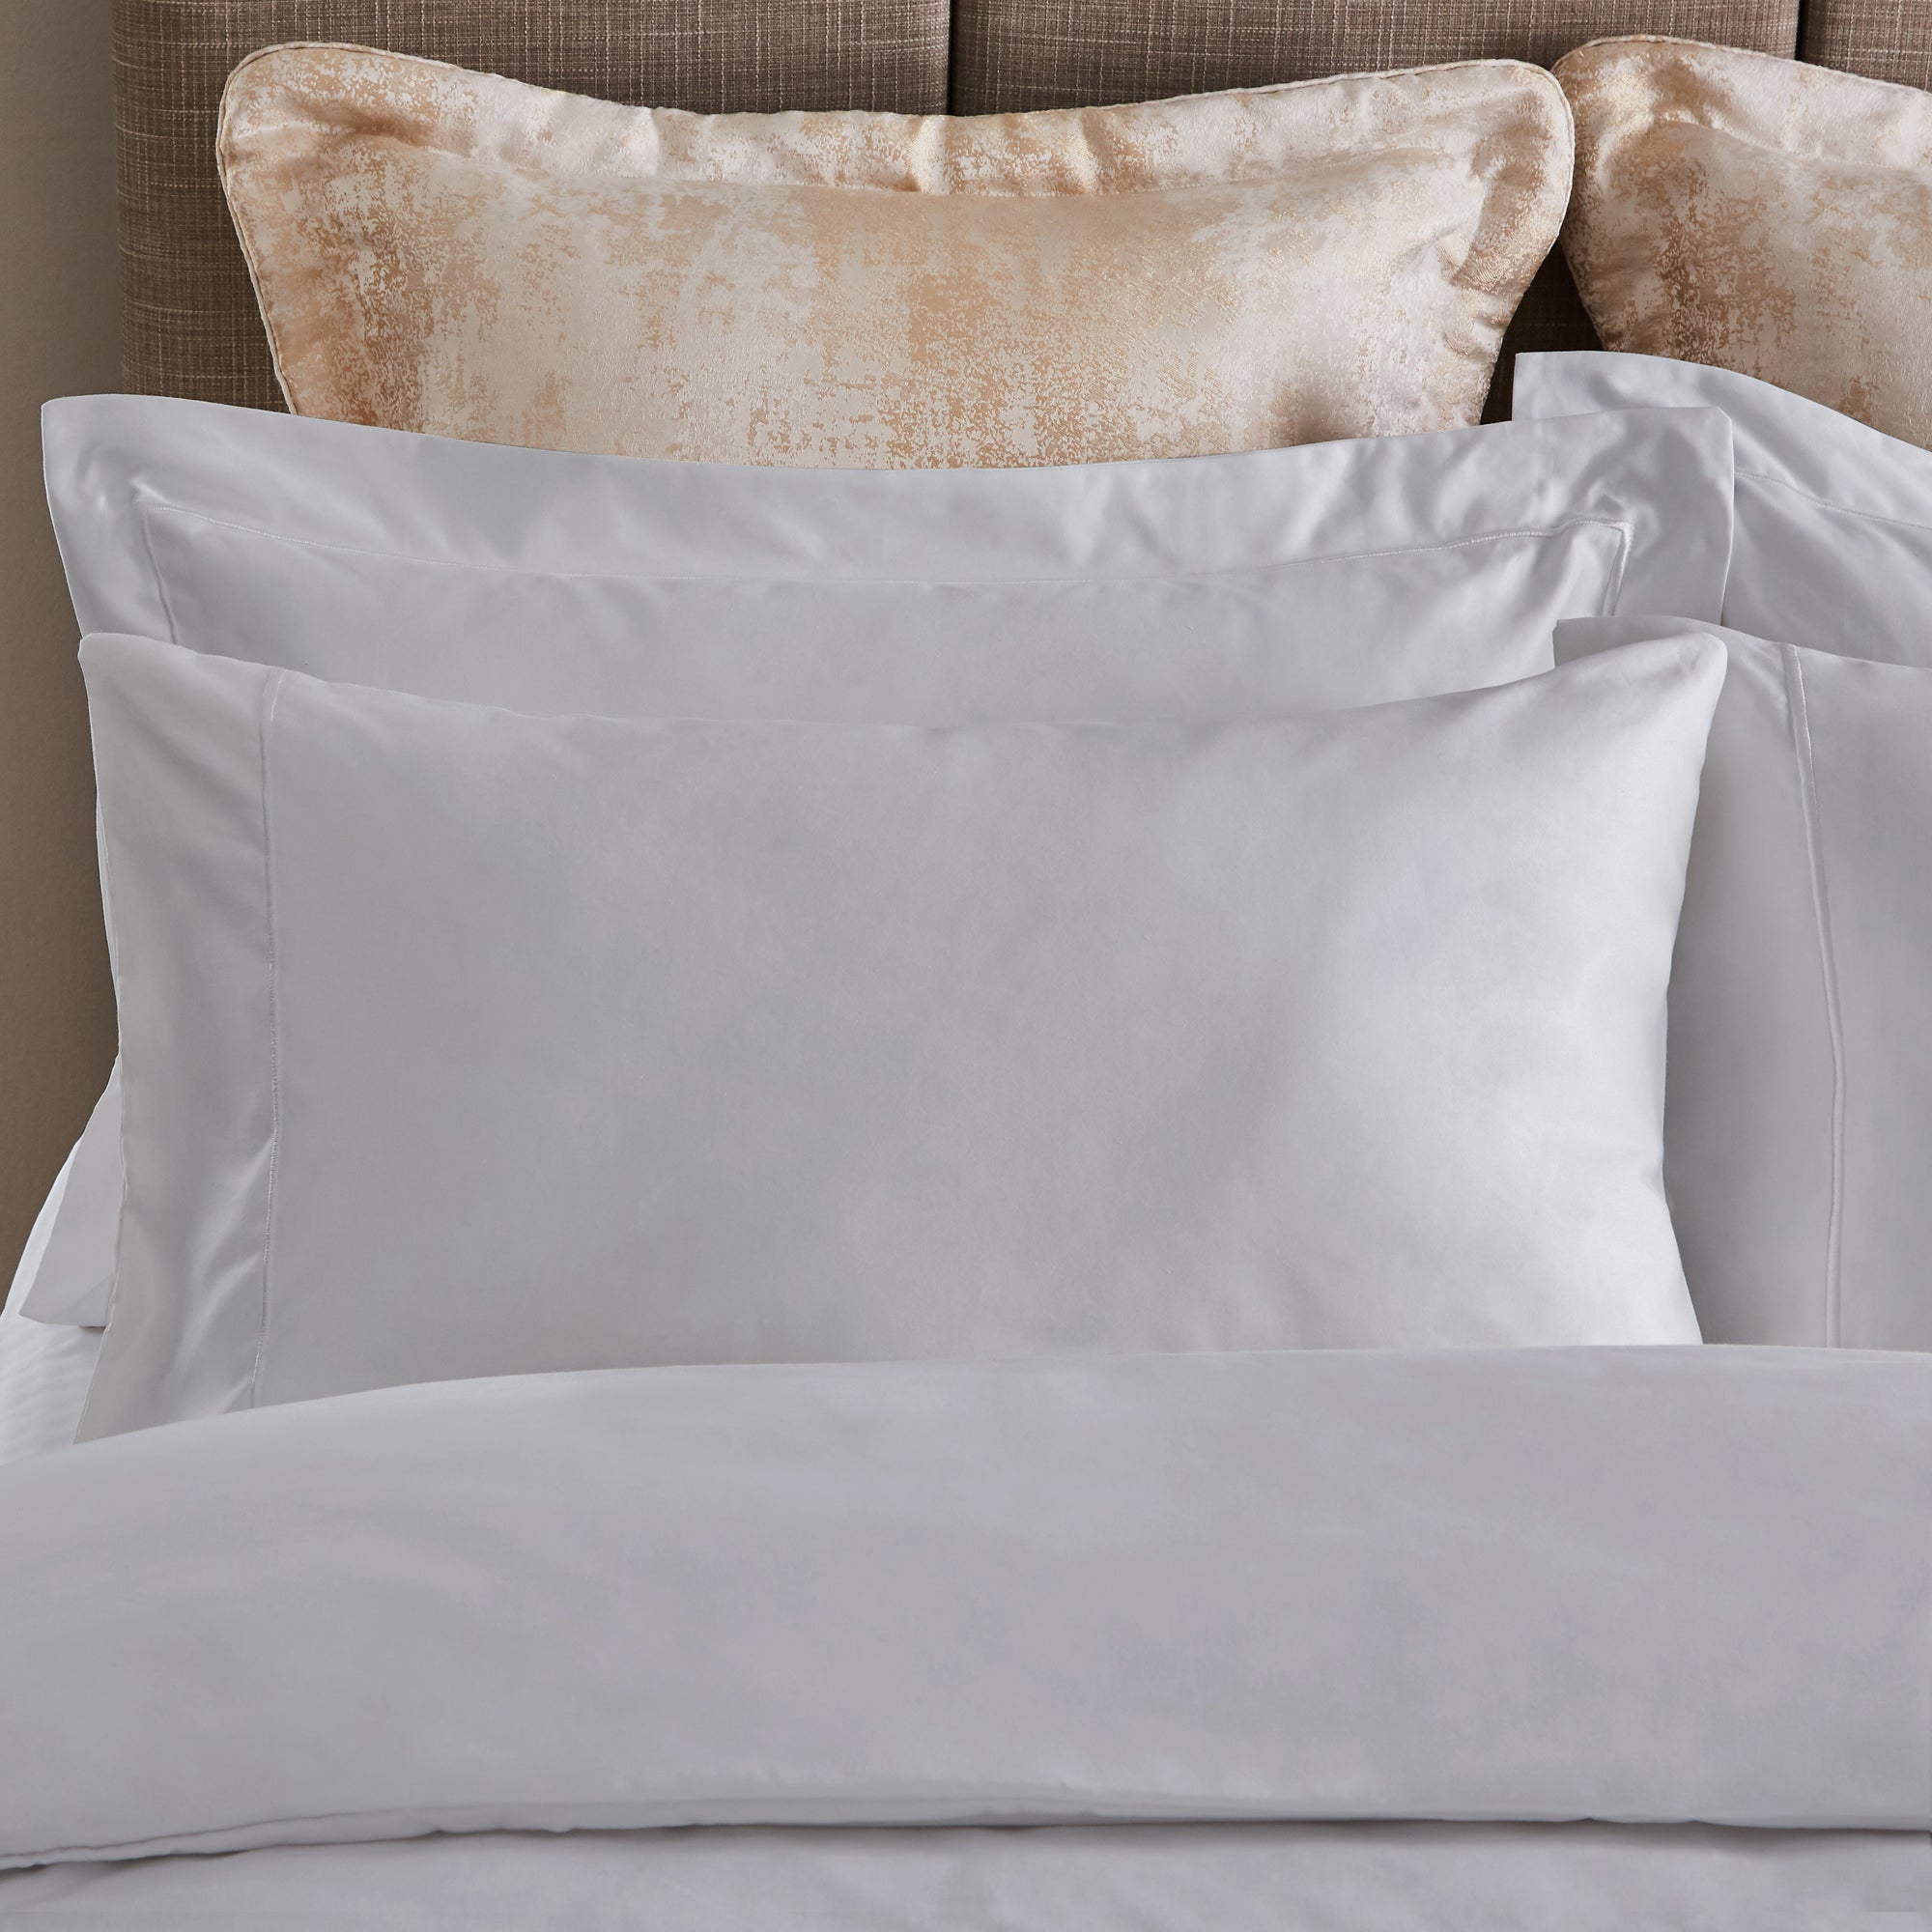 Dorma Egyptian Cotton Sateen 1000 Thread Count Standard Pillowcase